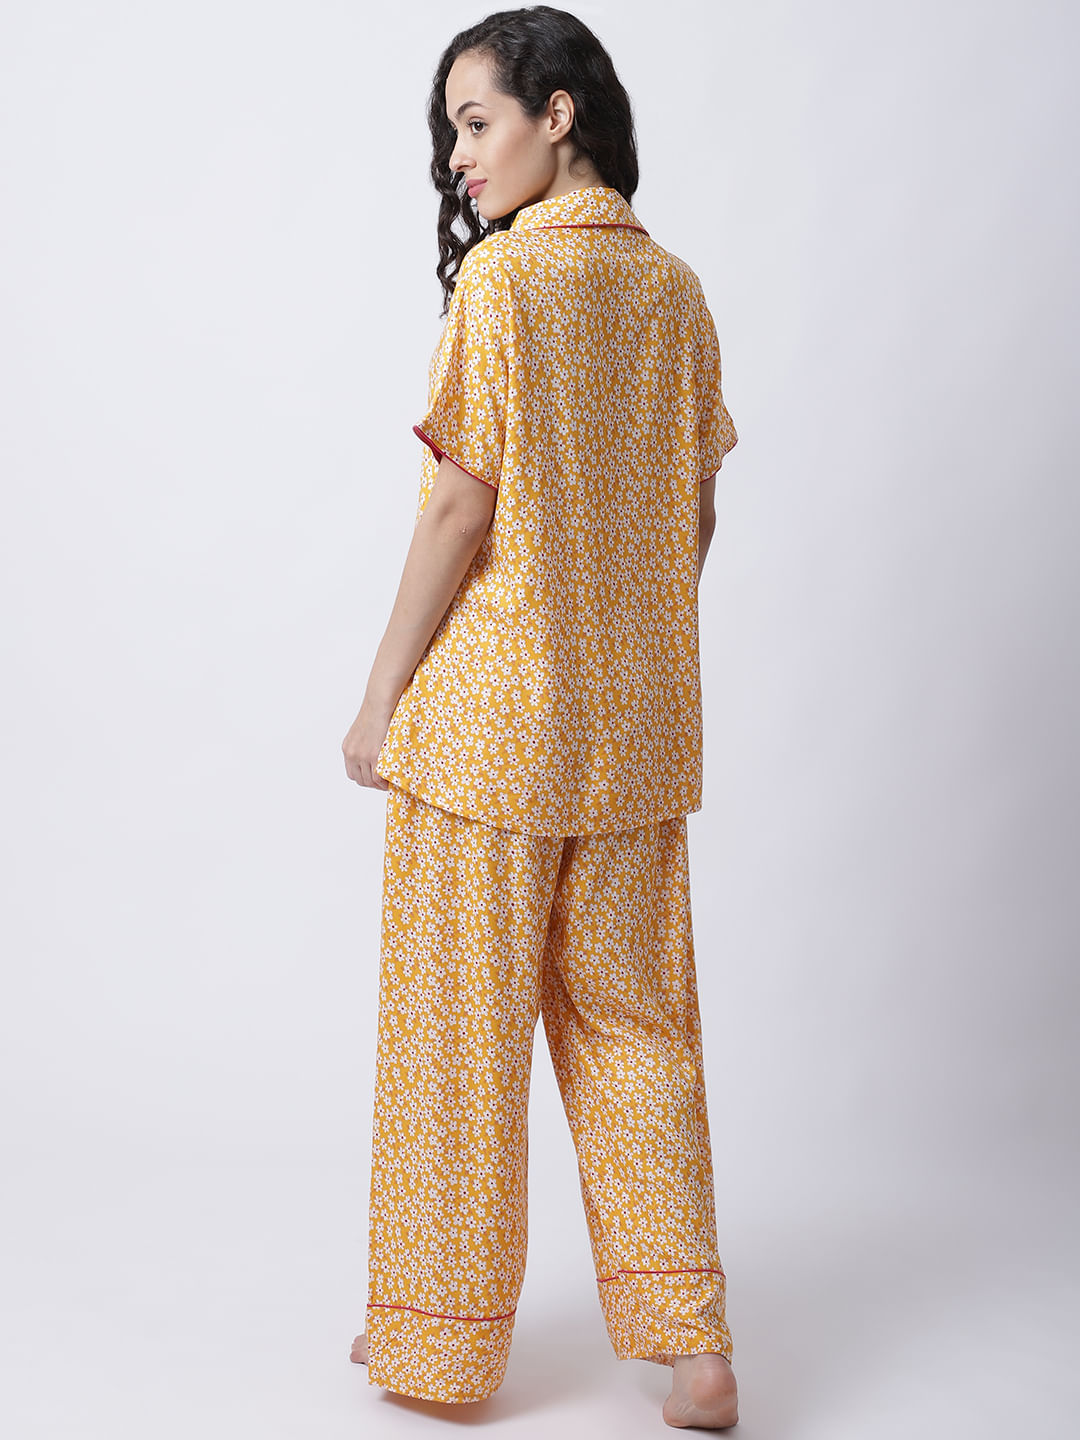 Buy Rayon Yellow Floral Printed Night Suit set of Shirt & Pyjama Trouser  for Women at Secret Wish | 491274